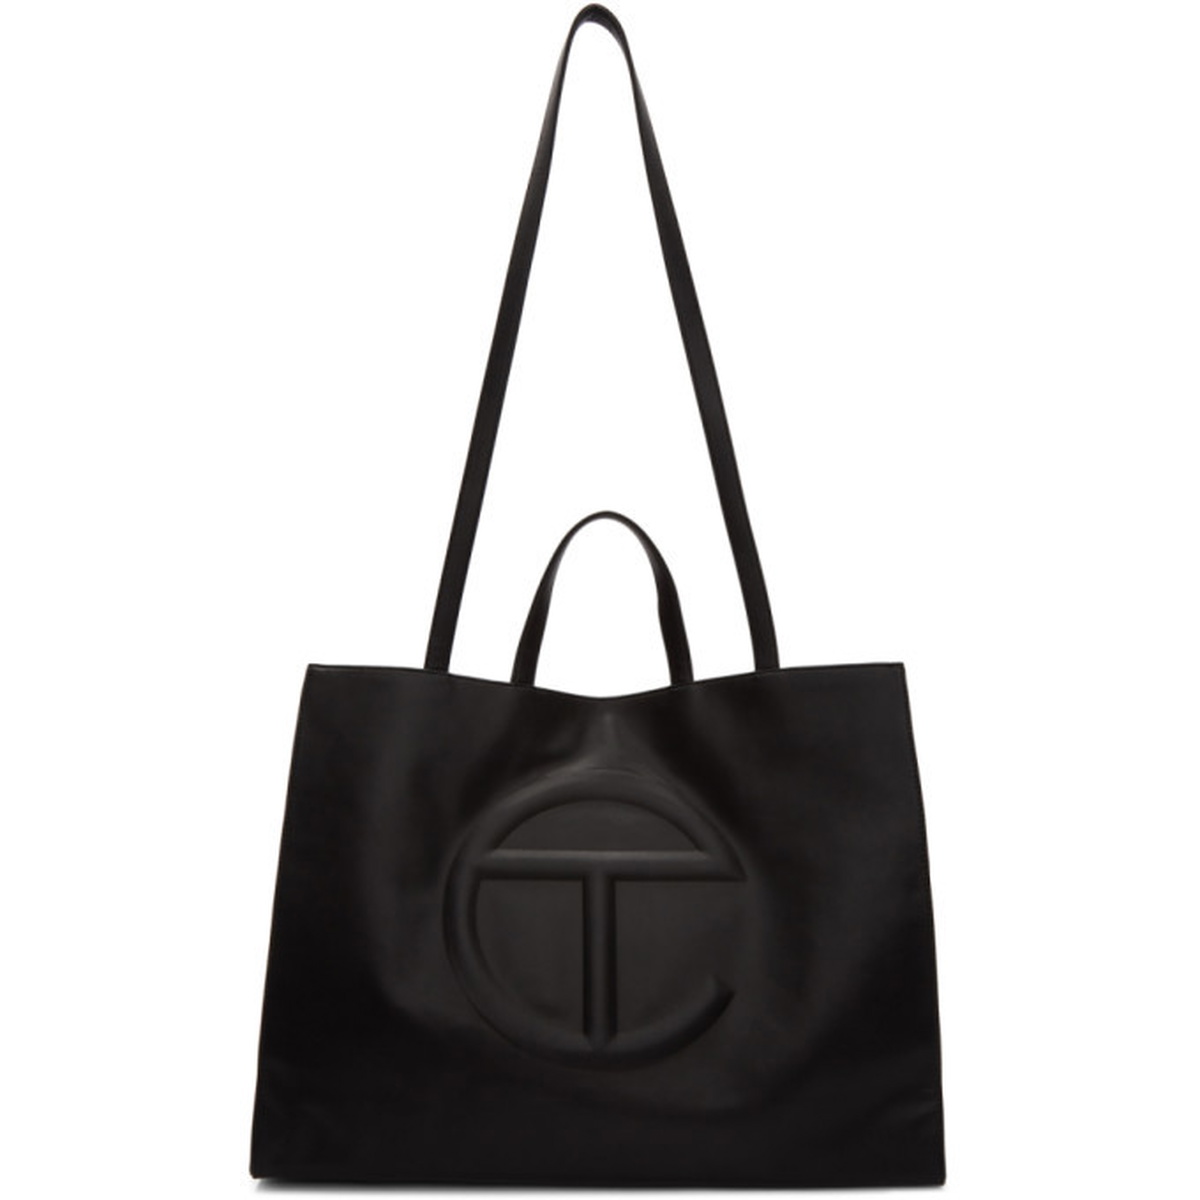 Telfar Large Logo Tote Bag in Brown